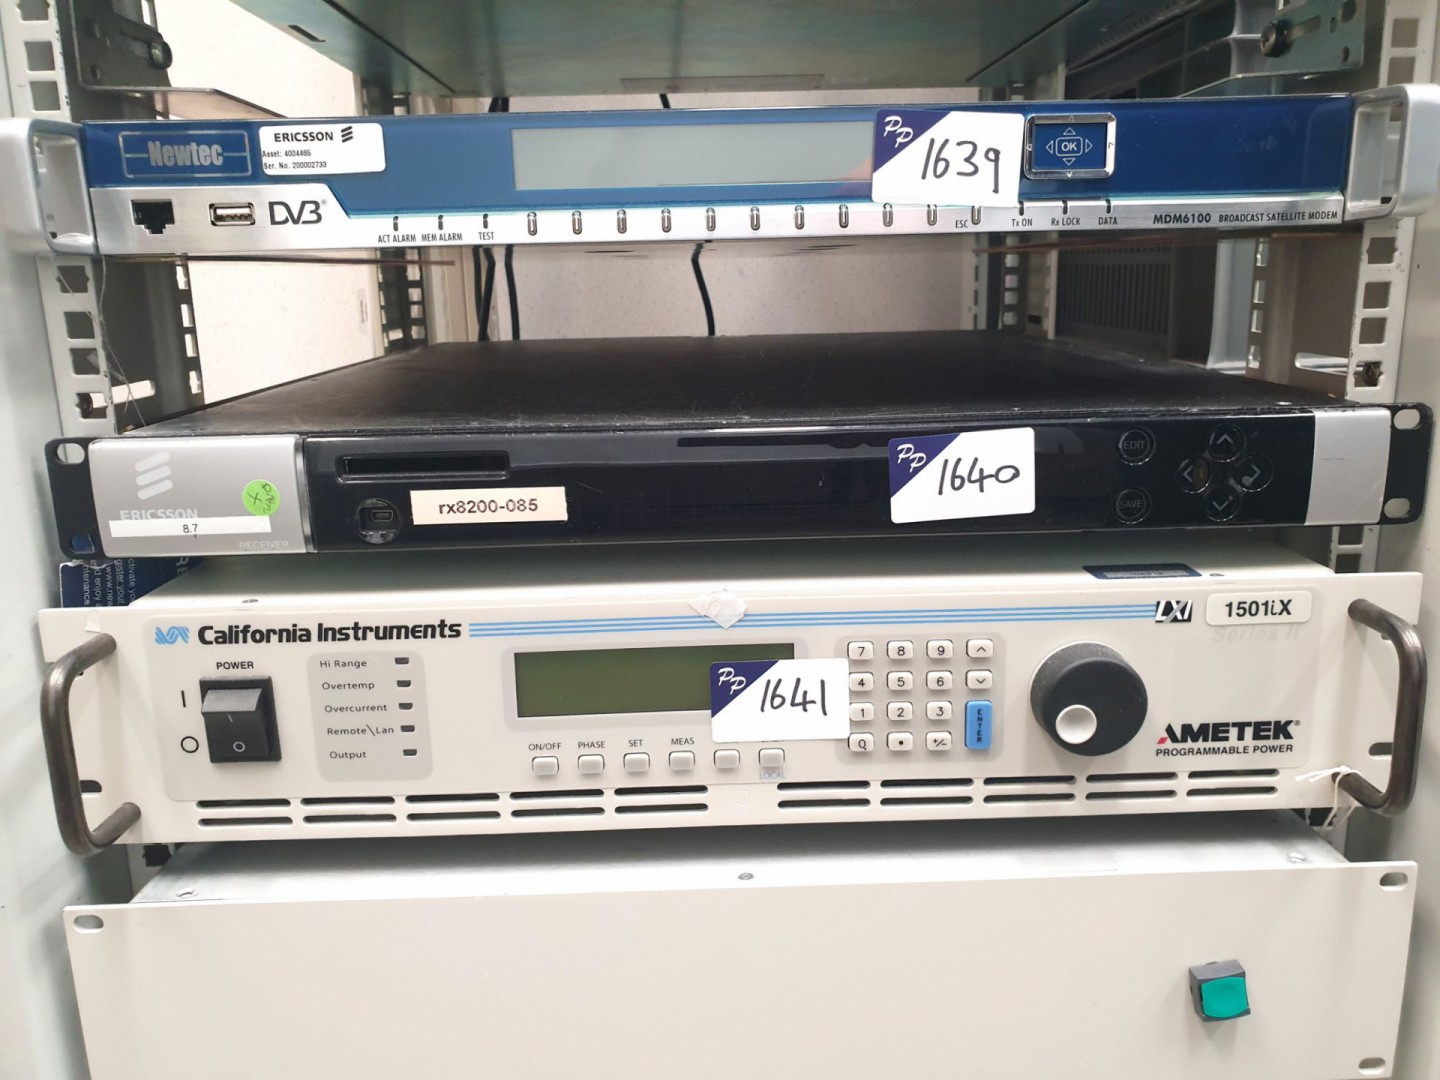 Newtec MDM6100 broadcast satellite modem